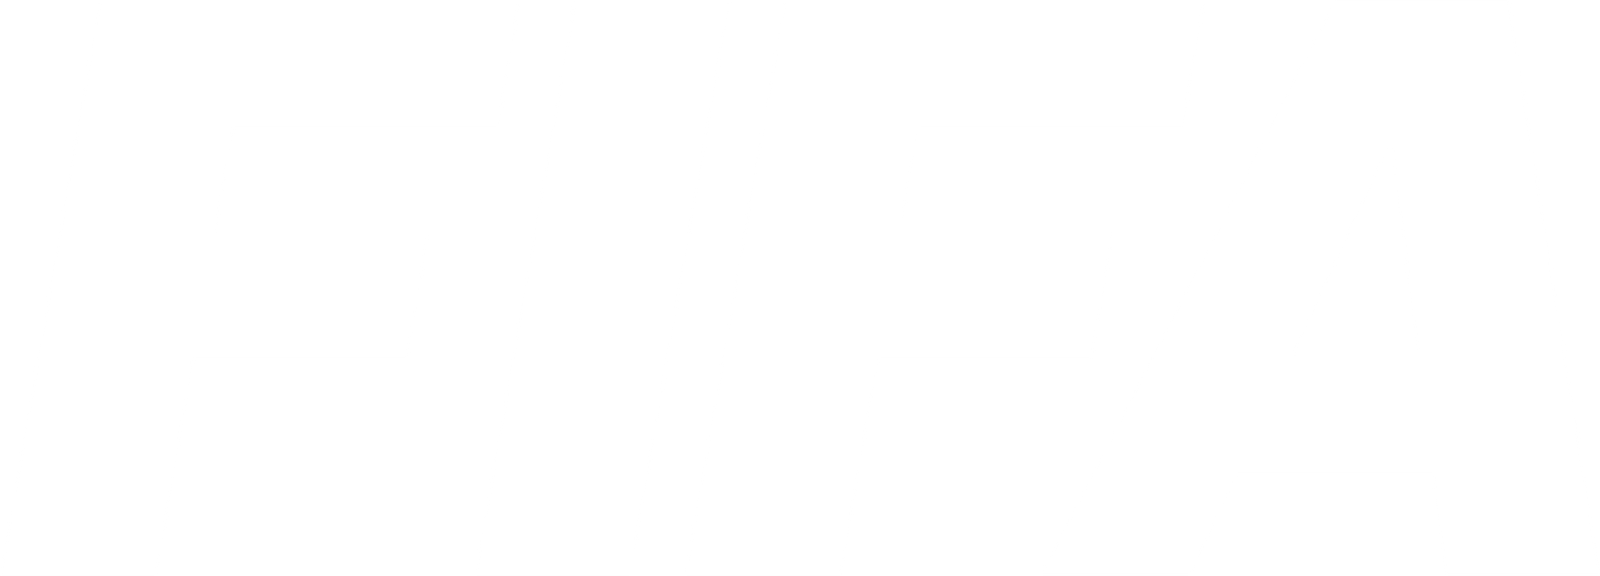 FIFA_series_logo